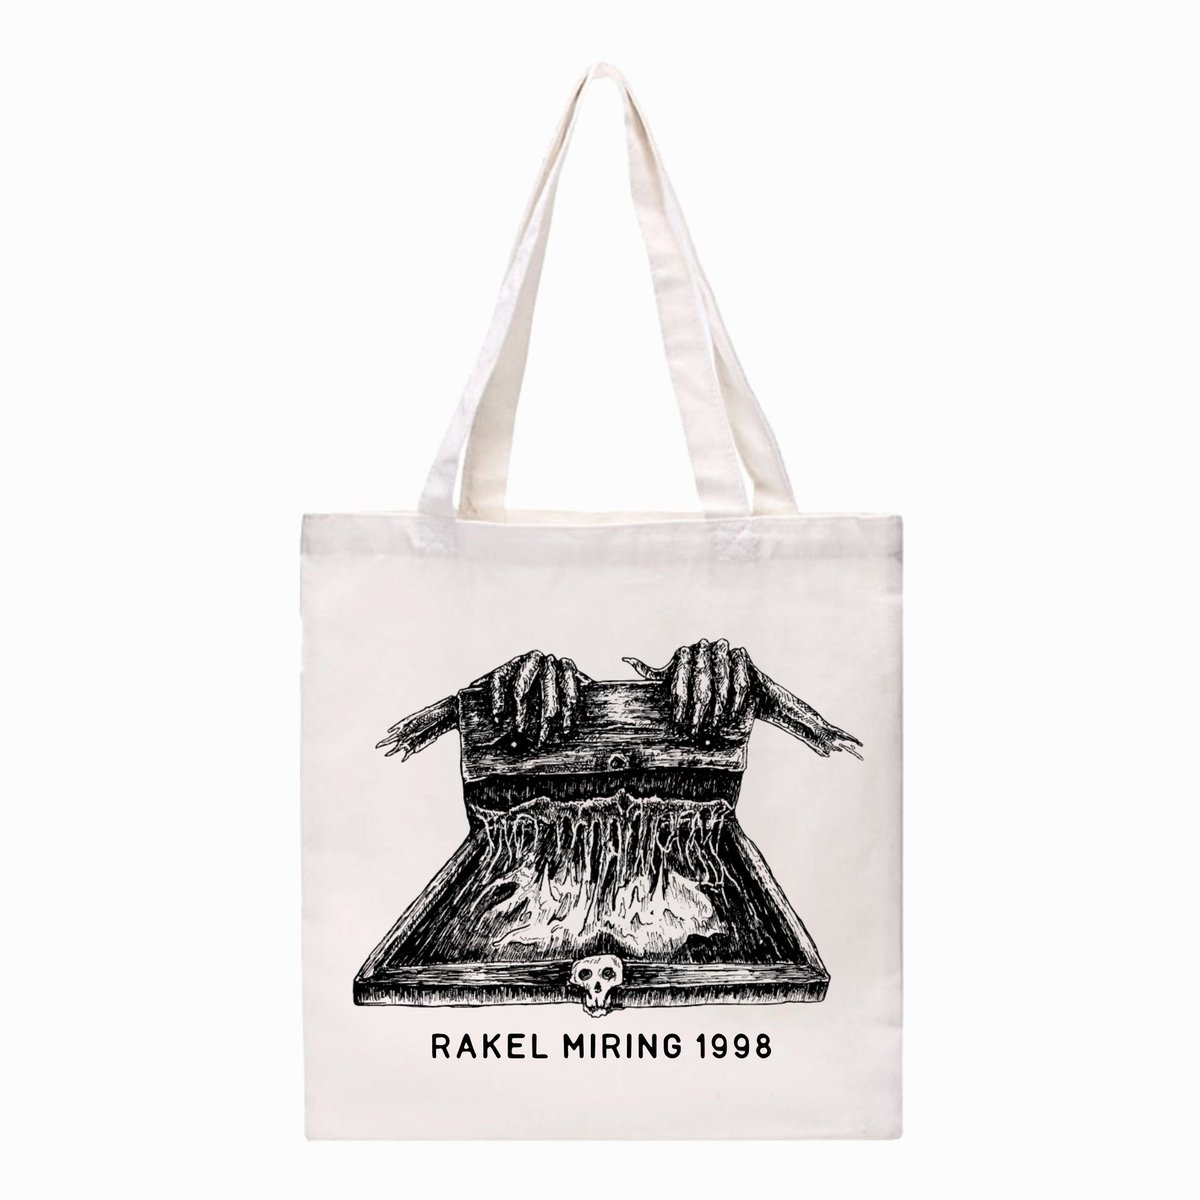 Free Tote Bag during the mounth of August ✌

#rakelmiring #screenprintinglife